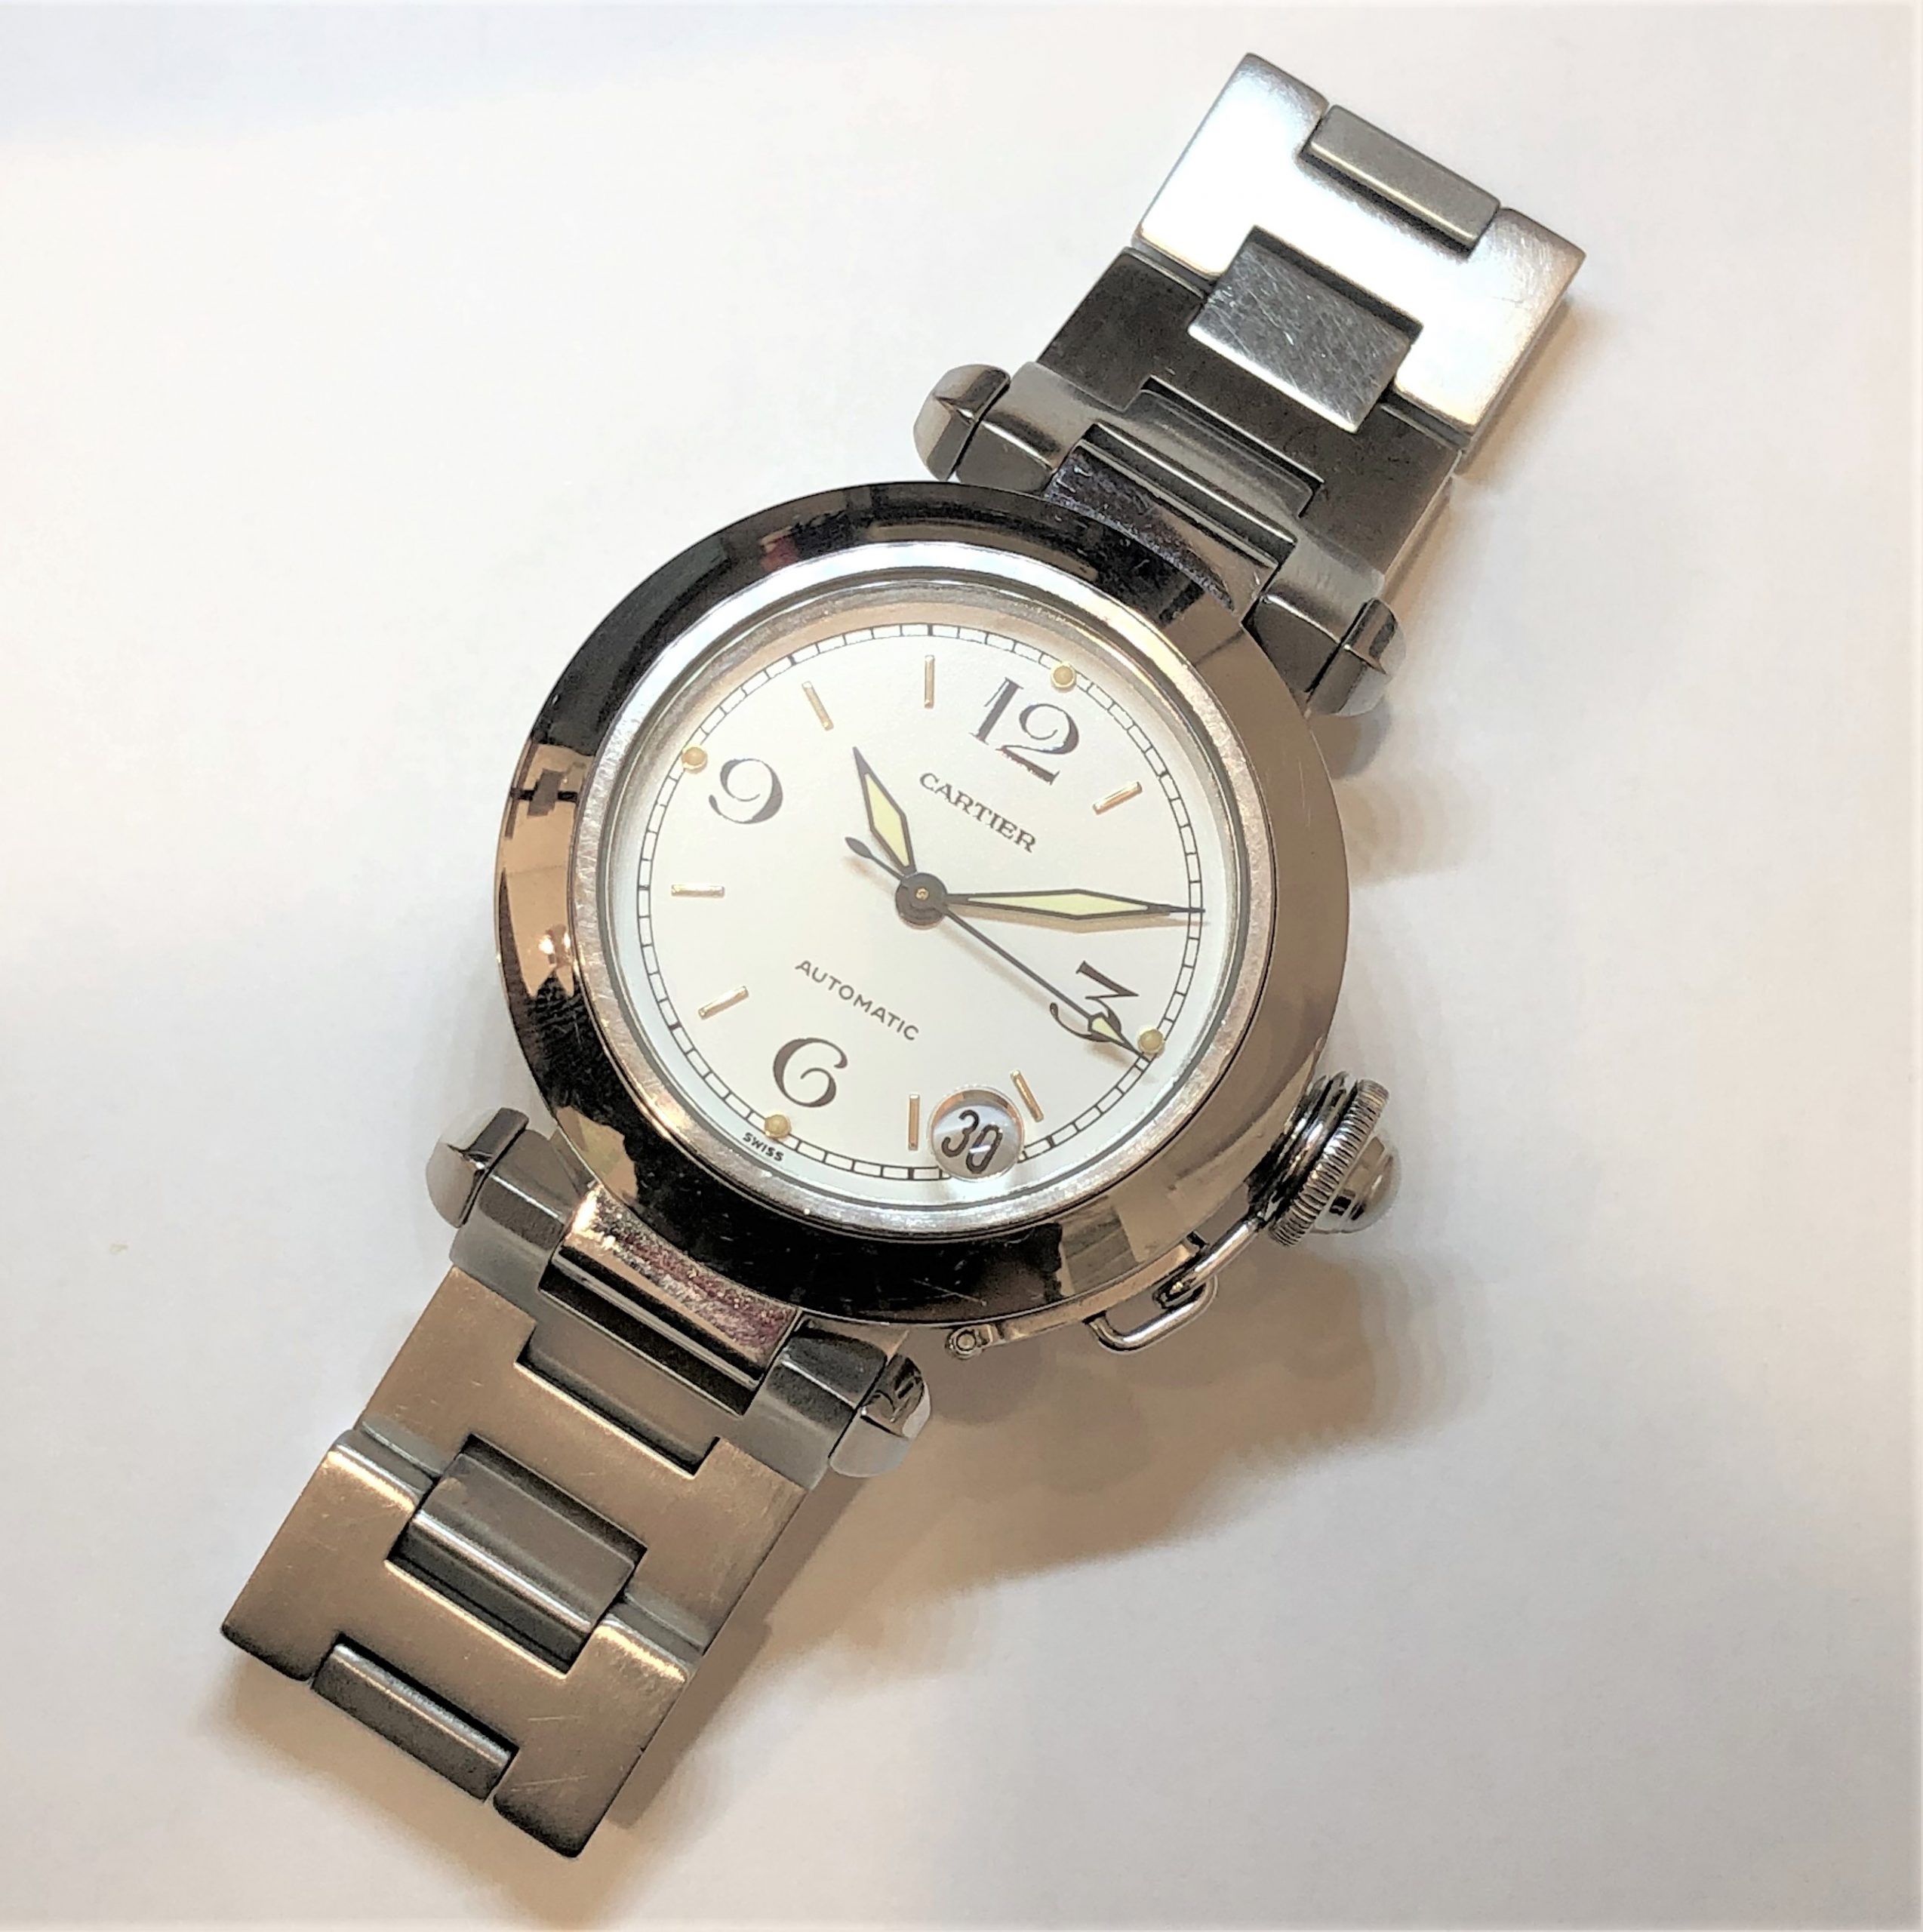 【Cartier/カルティエ】パシャC スモールセコンド ボーイズ W31015M7 AT 腕時計